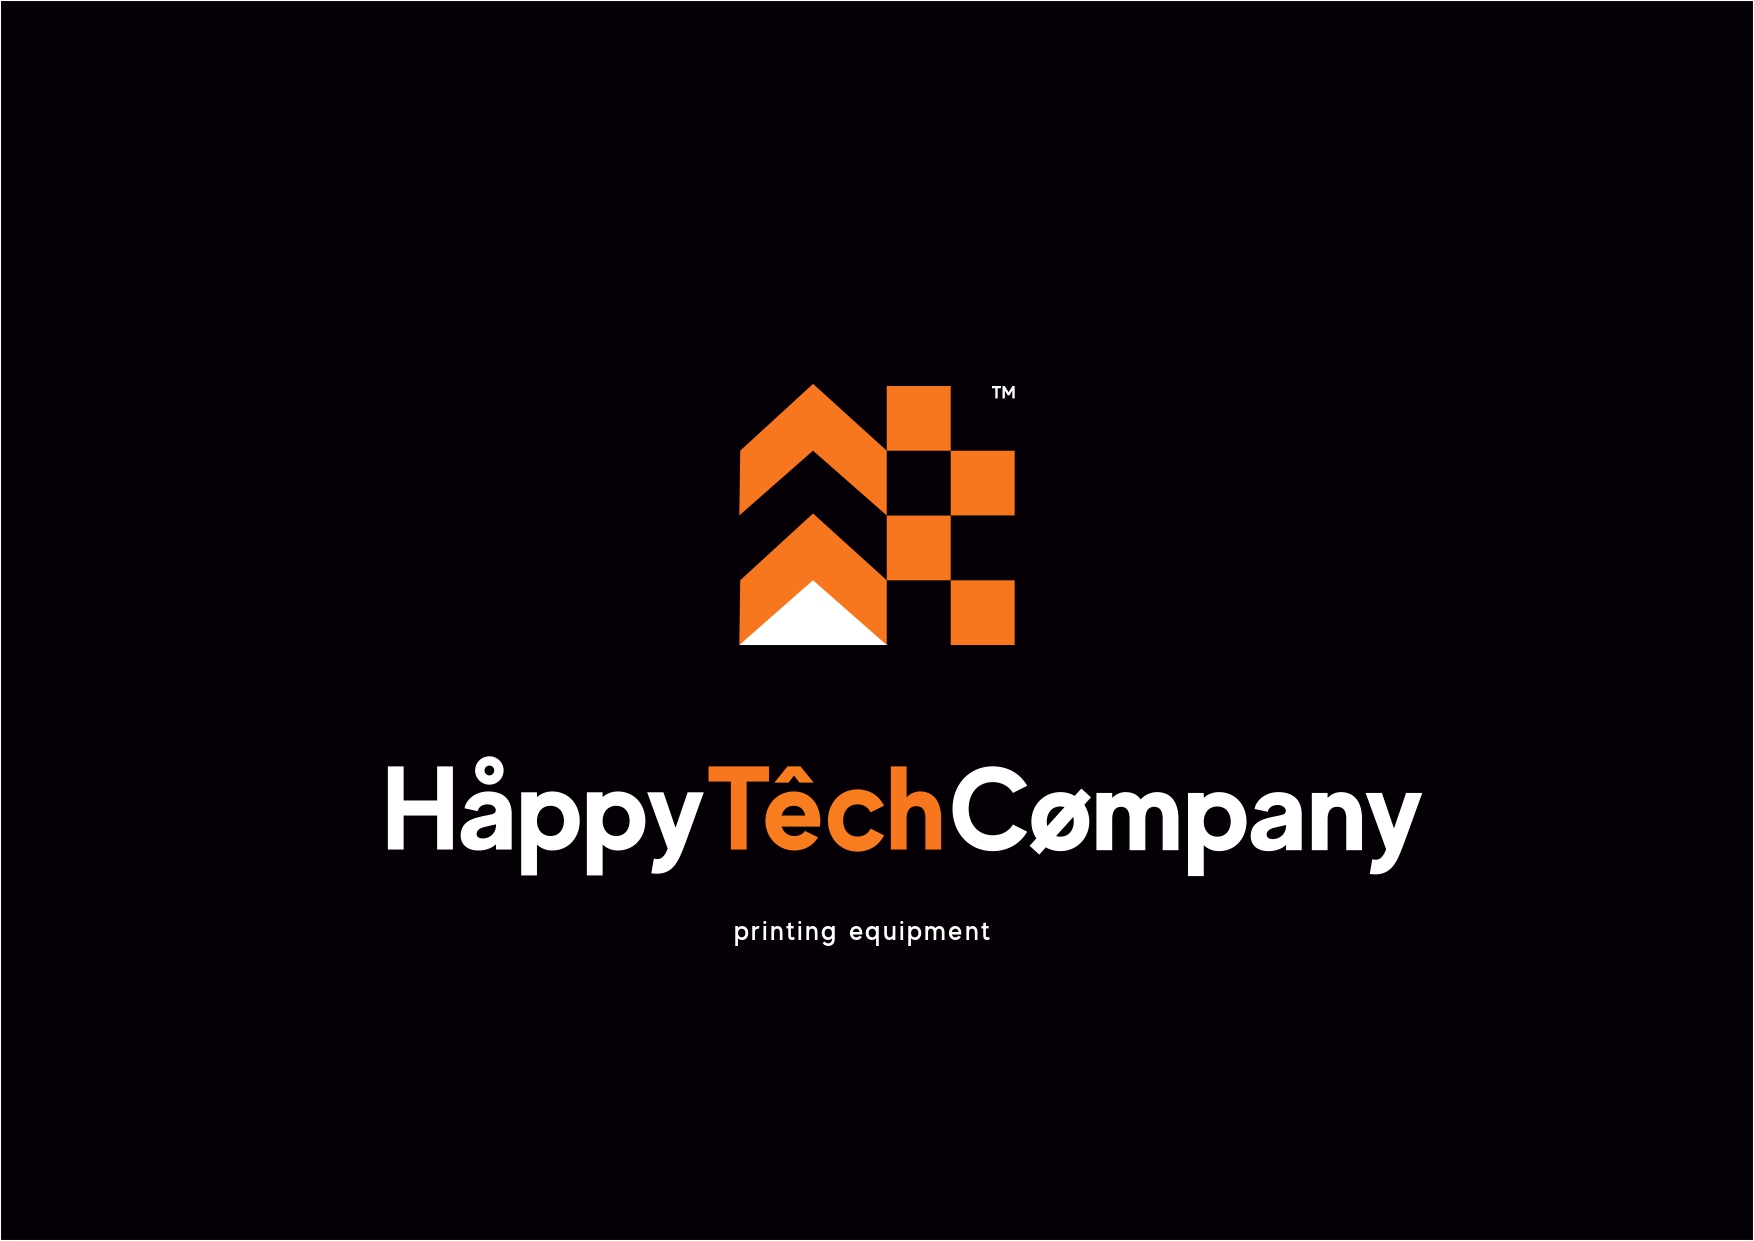 LLC Happy Tech Company logo